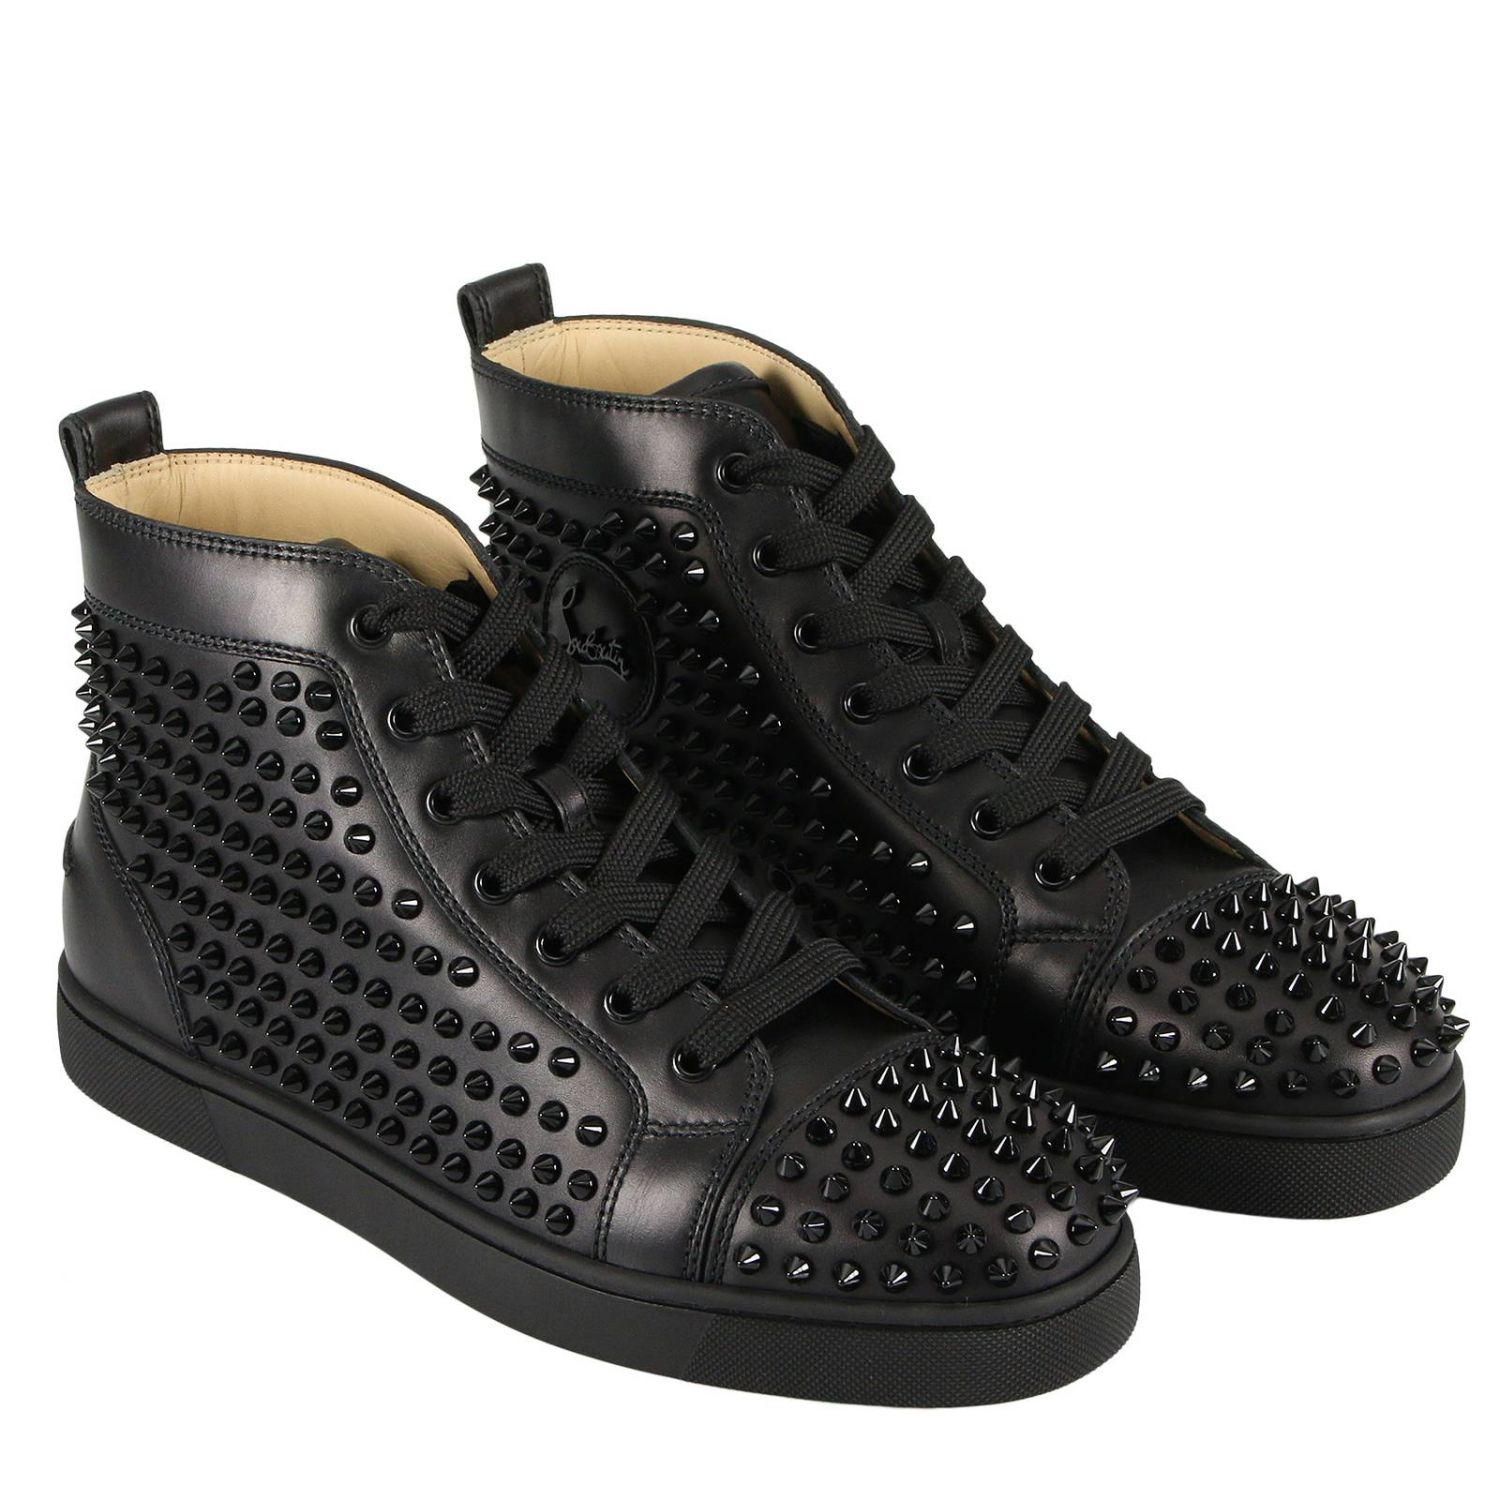 Shoes men Christian Louboutin | Sneakers Christian Louboutin Men Black ...